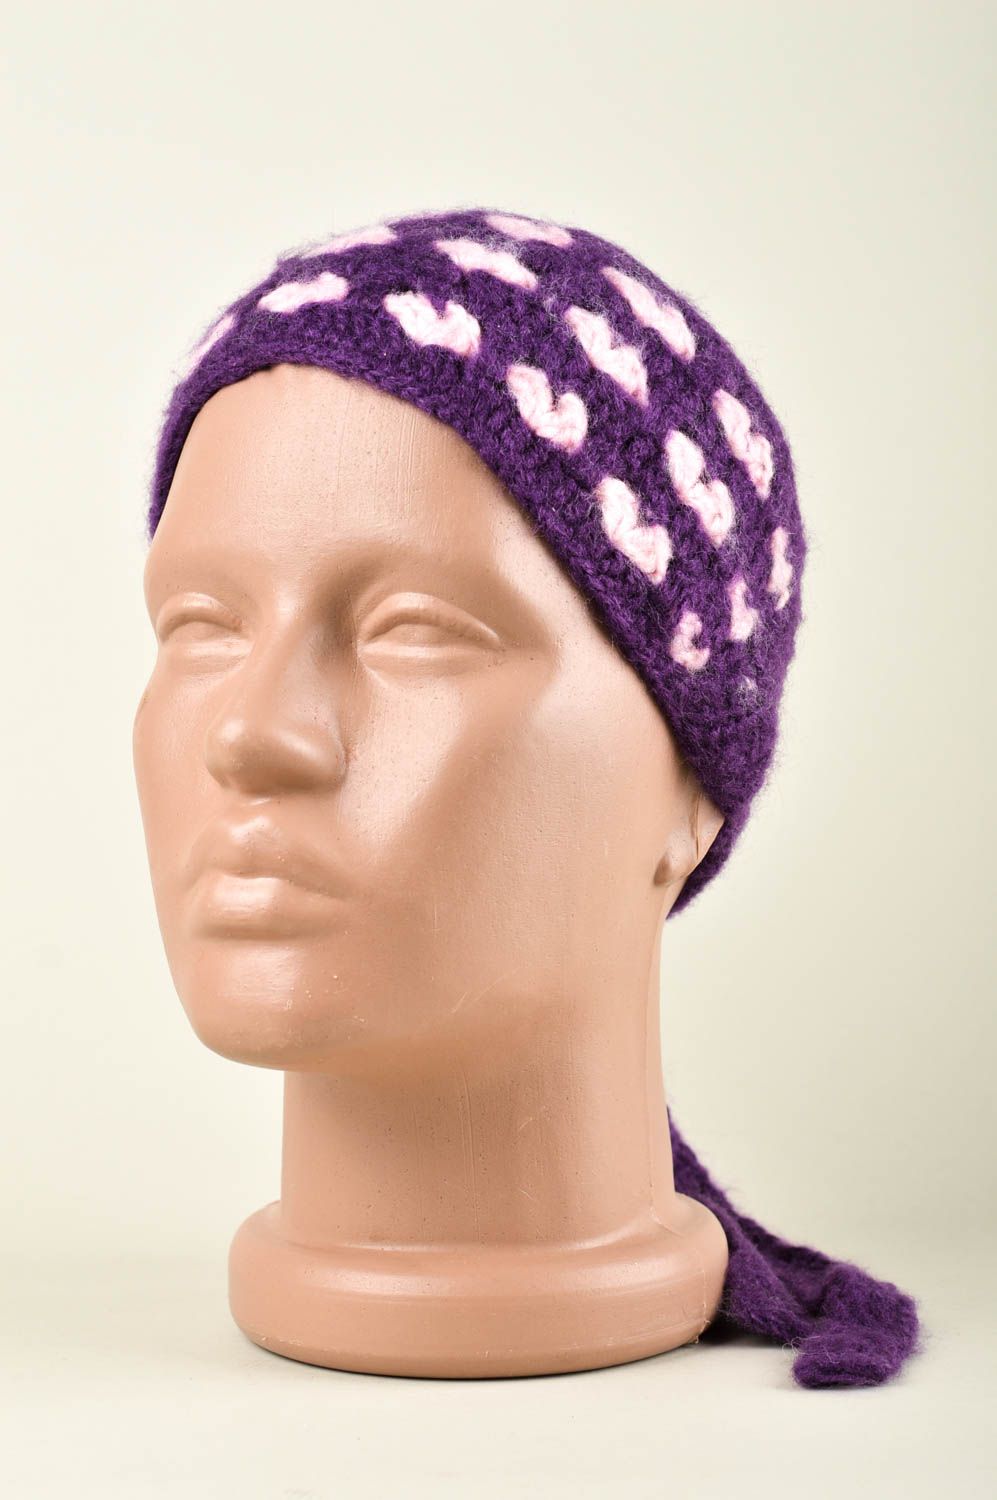 Handmade soft crochet headband hair band fashion tips best gifts for kids photo 1